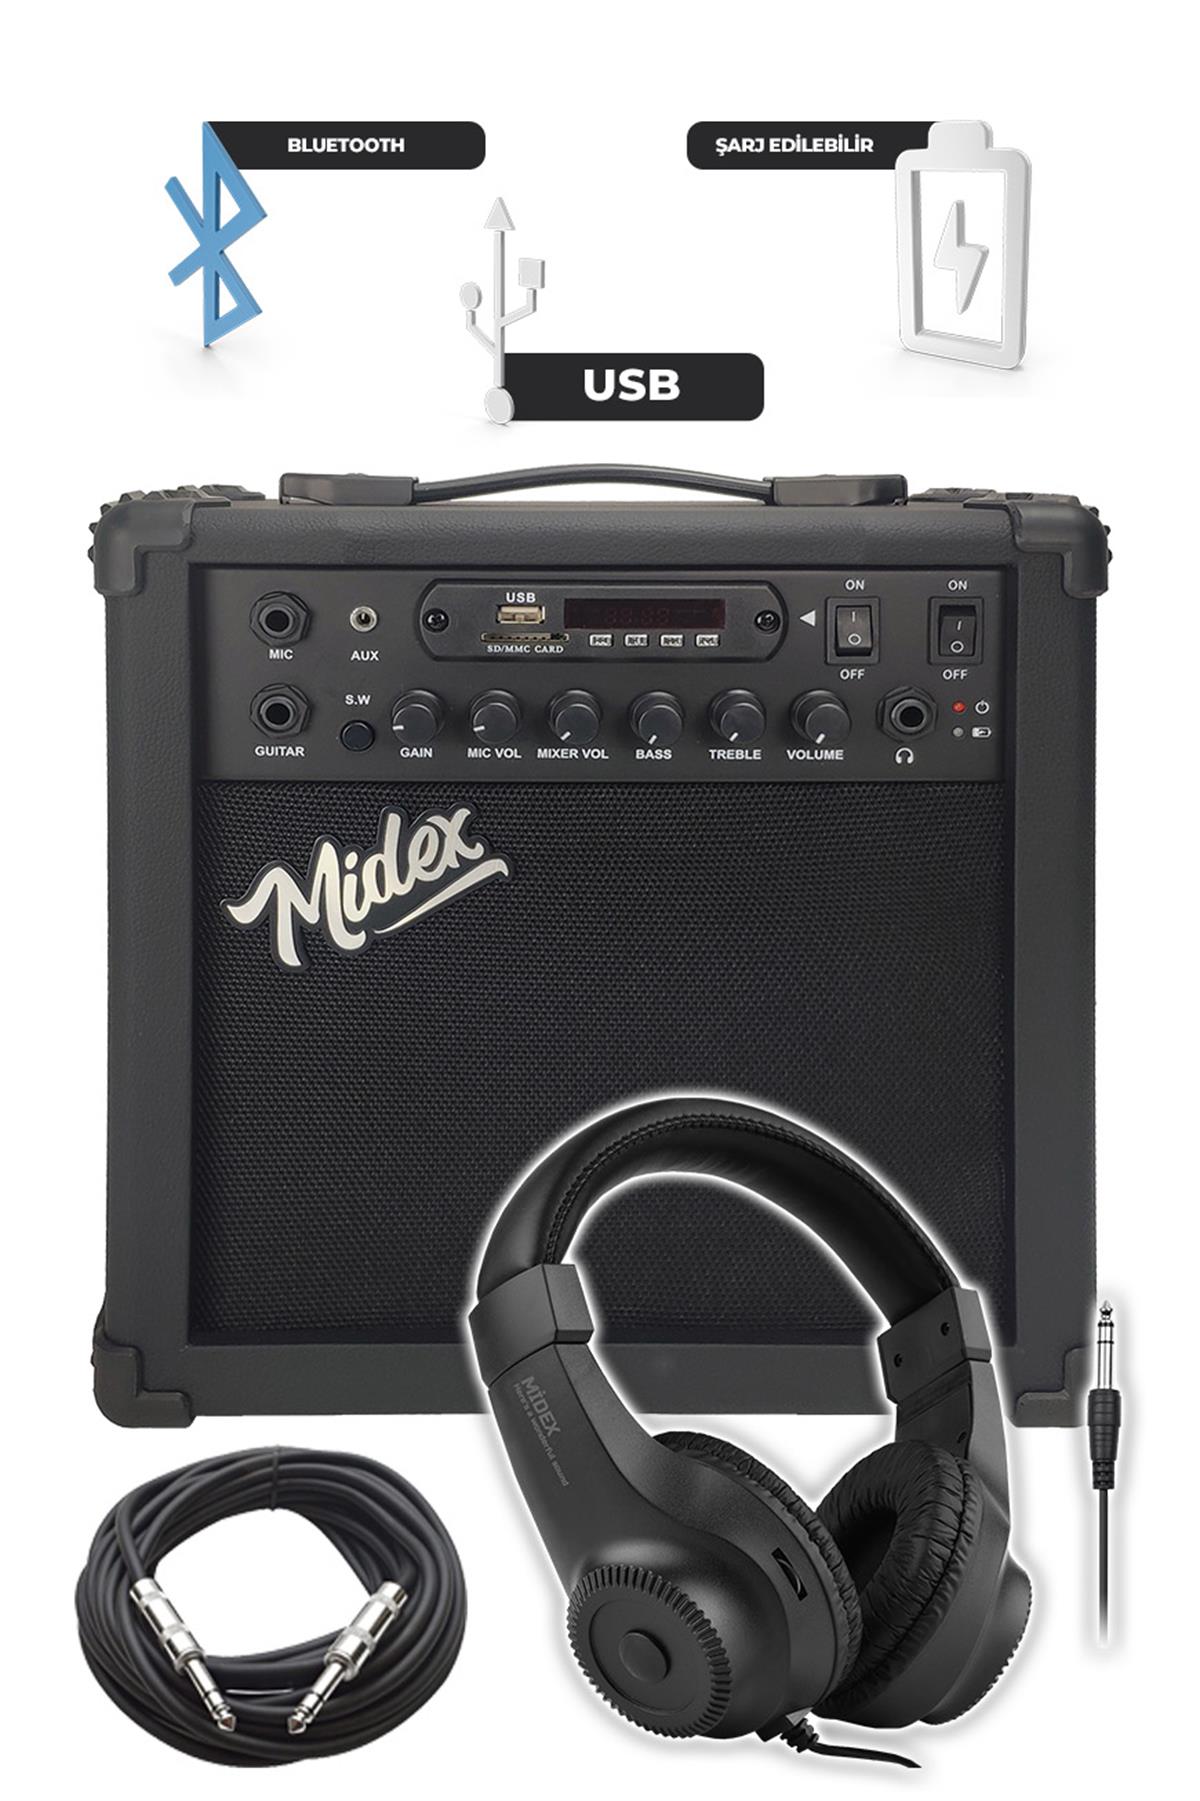 Midex GRX-300-20-AMP Elektro Gitar Seti 20 Watt Gainli Amfi